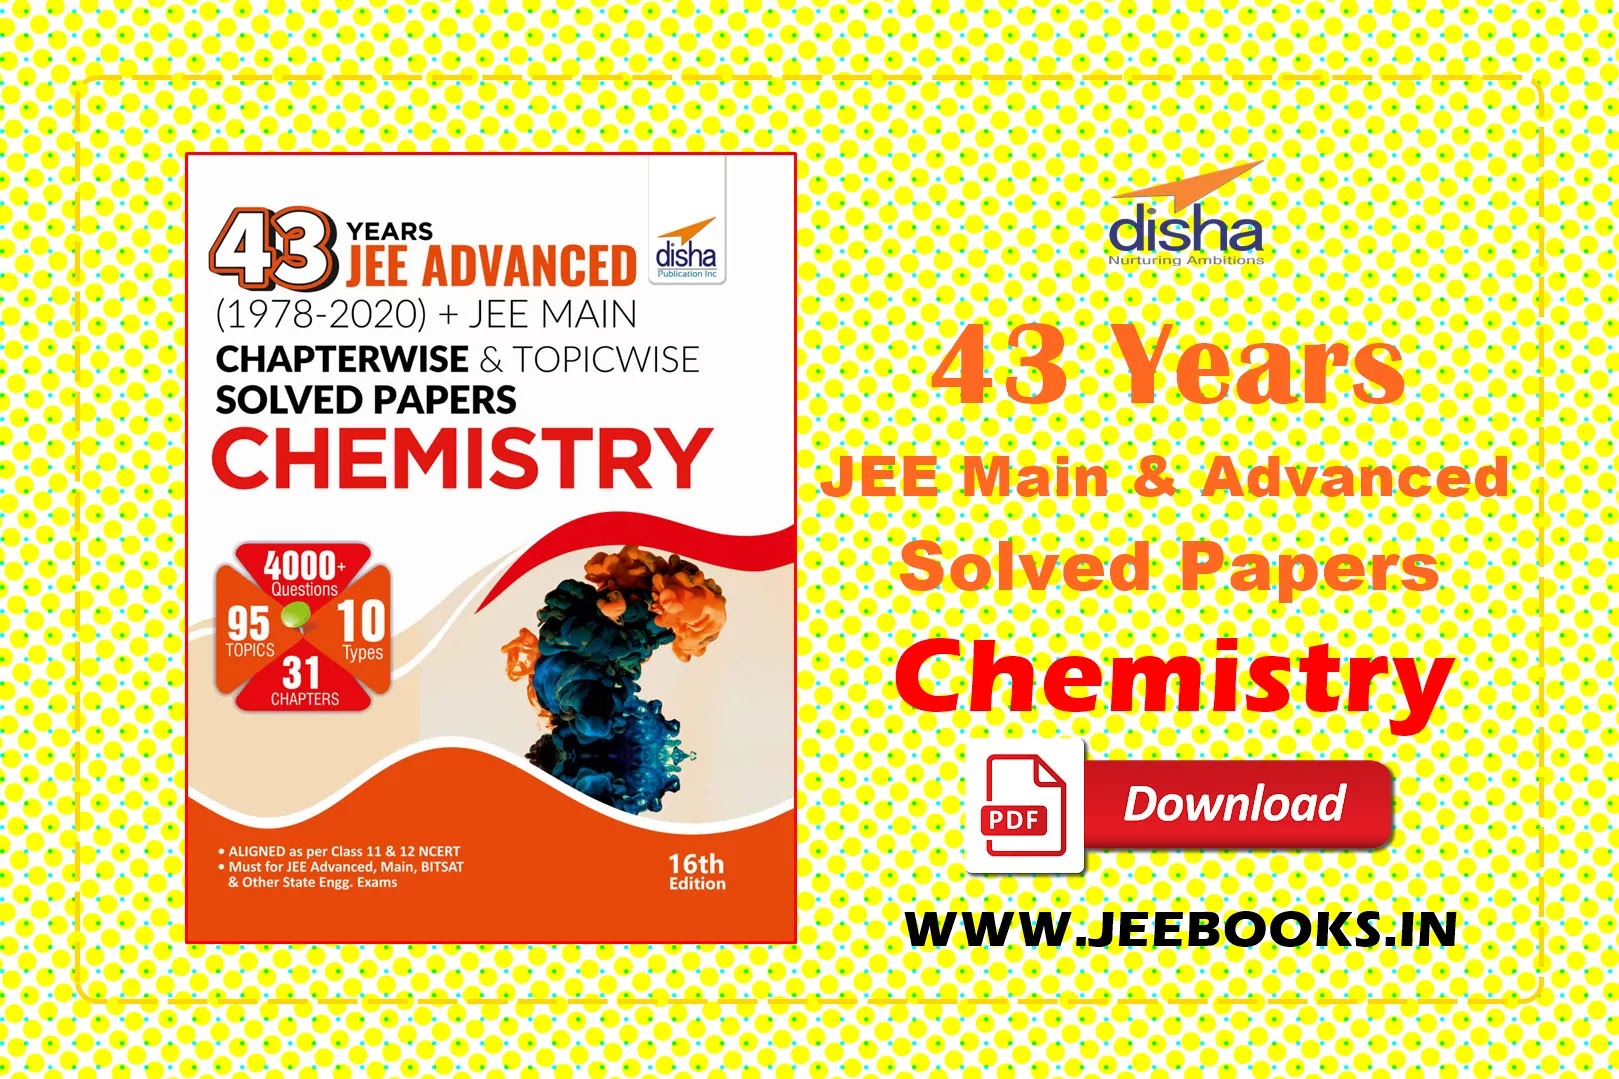 39 years iit jee disha pdf free download chemistry 5.1 surround sound software windows 7 free download